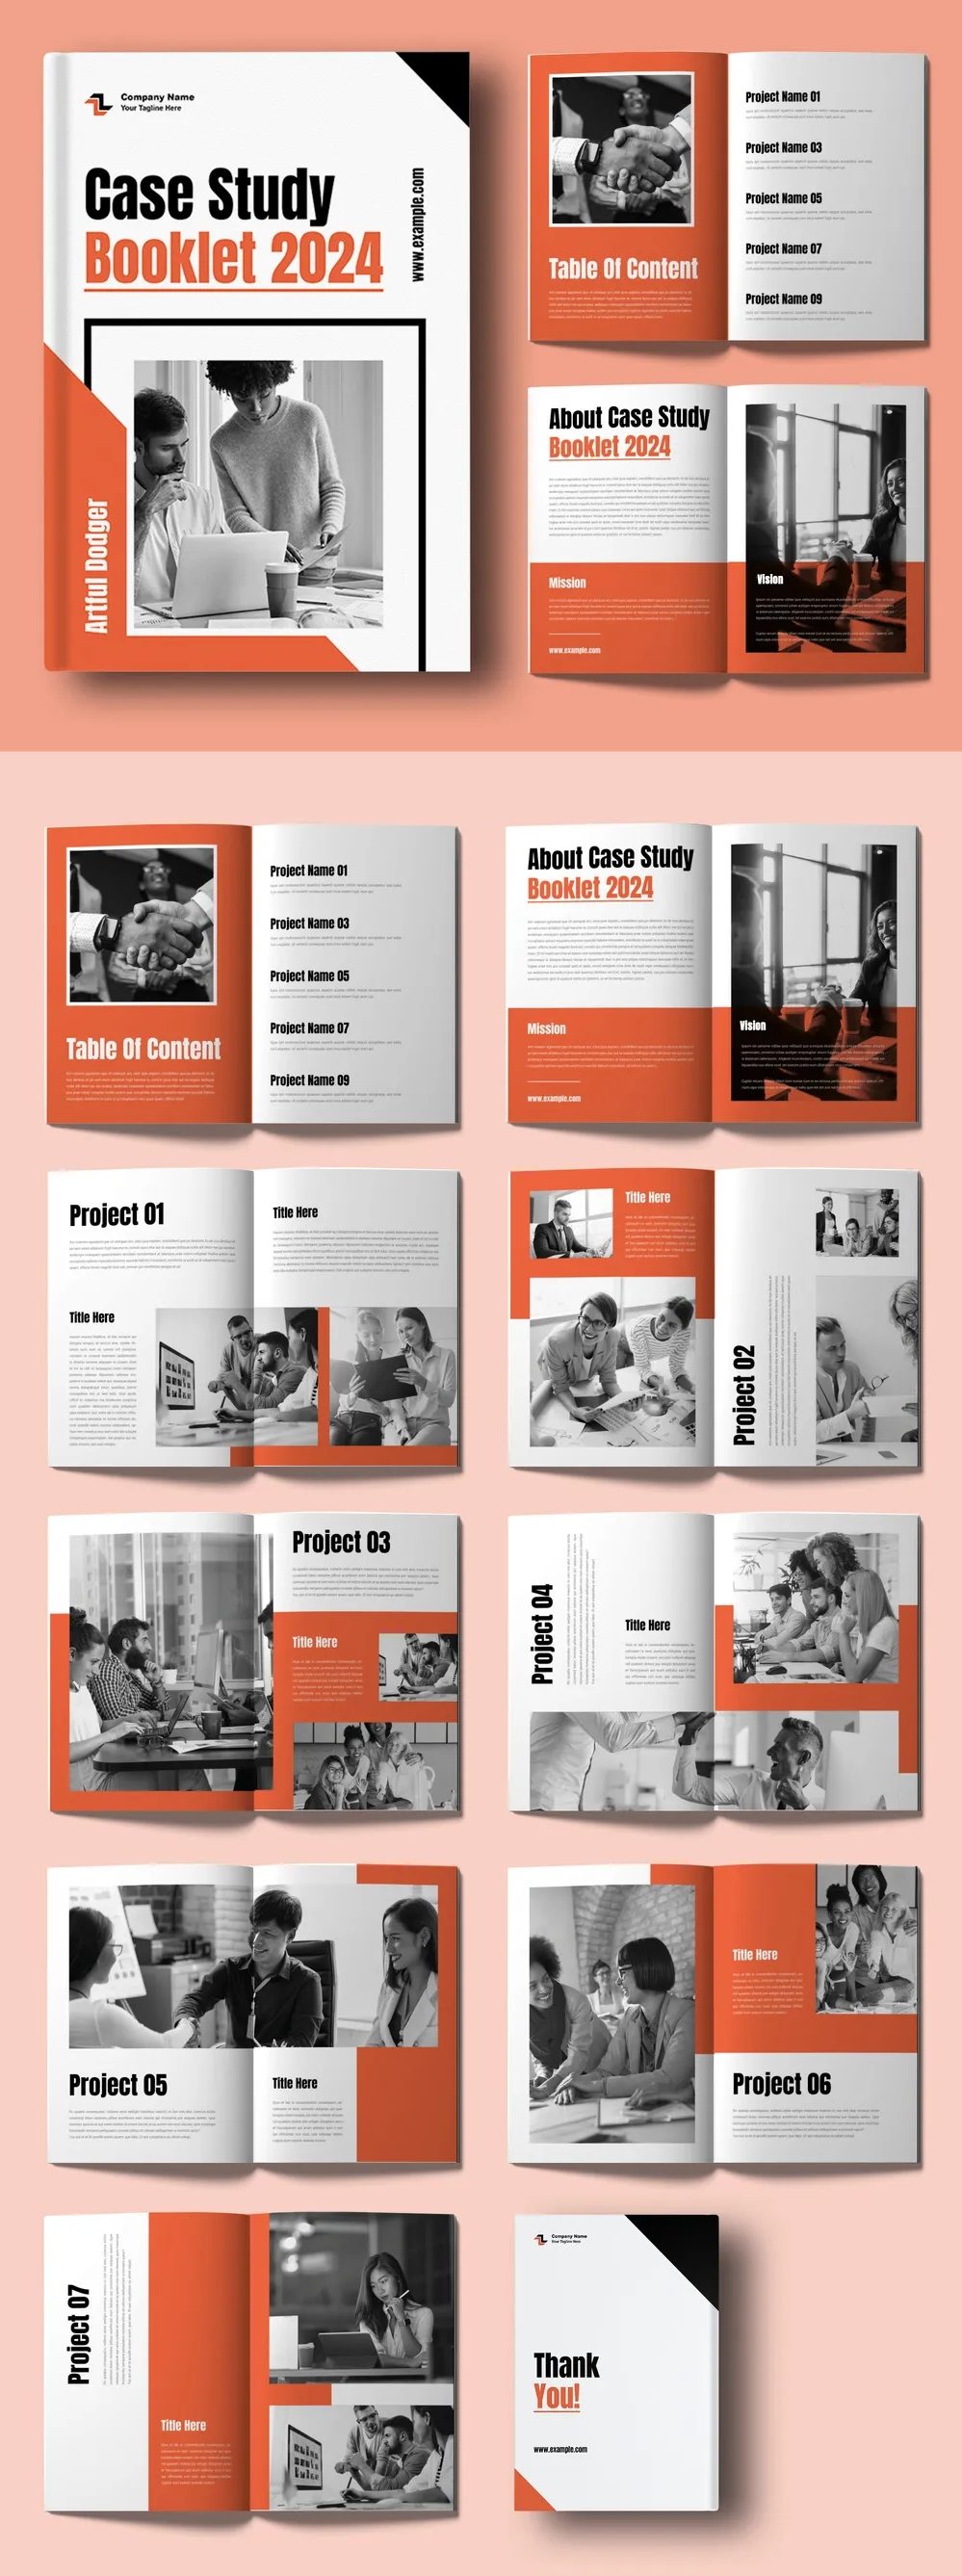 Adobestock - Case Study Booklet Layout 723806327